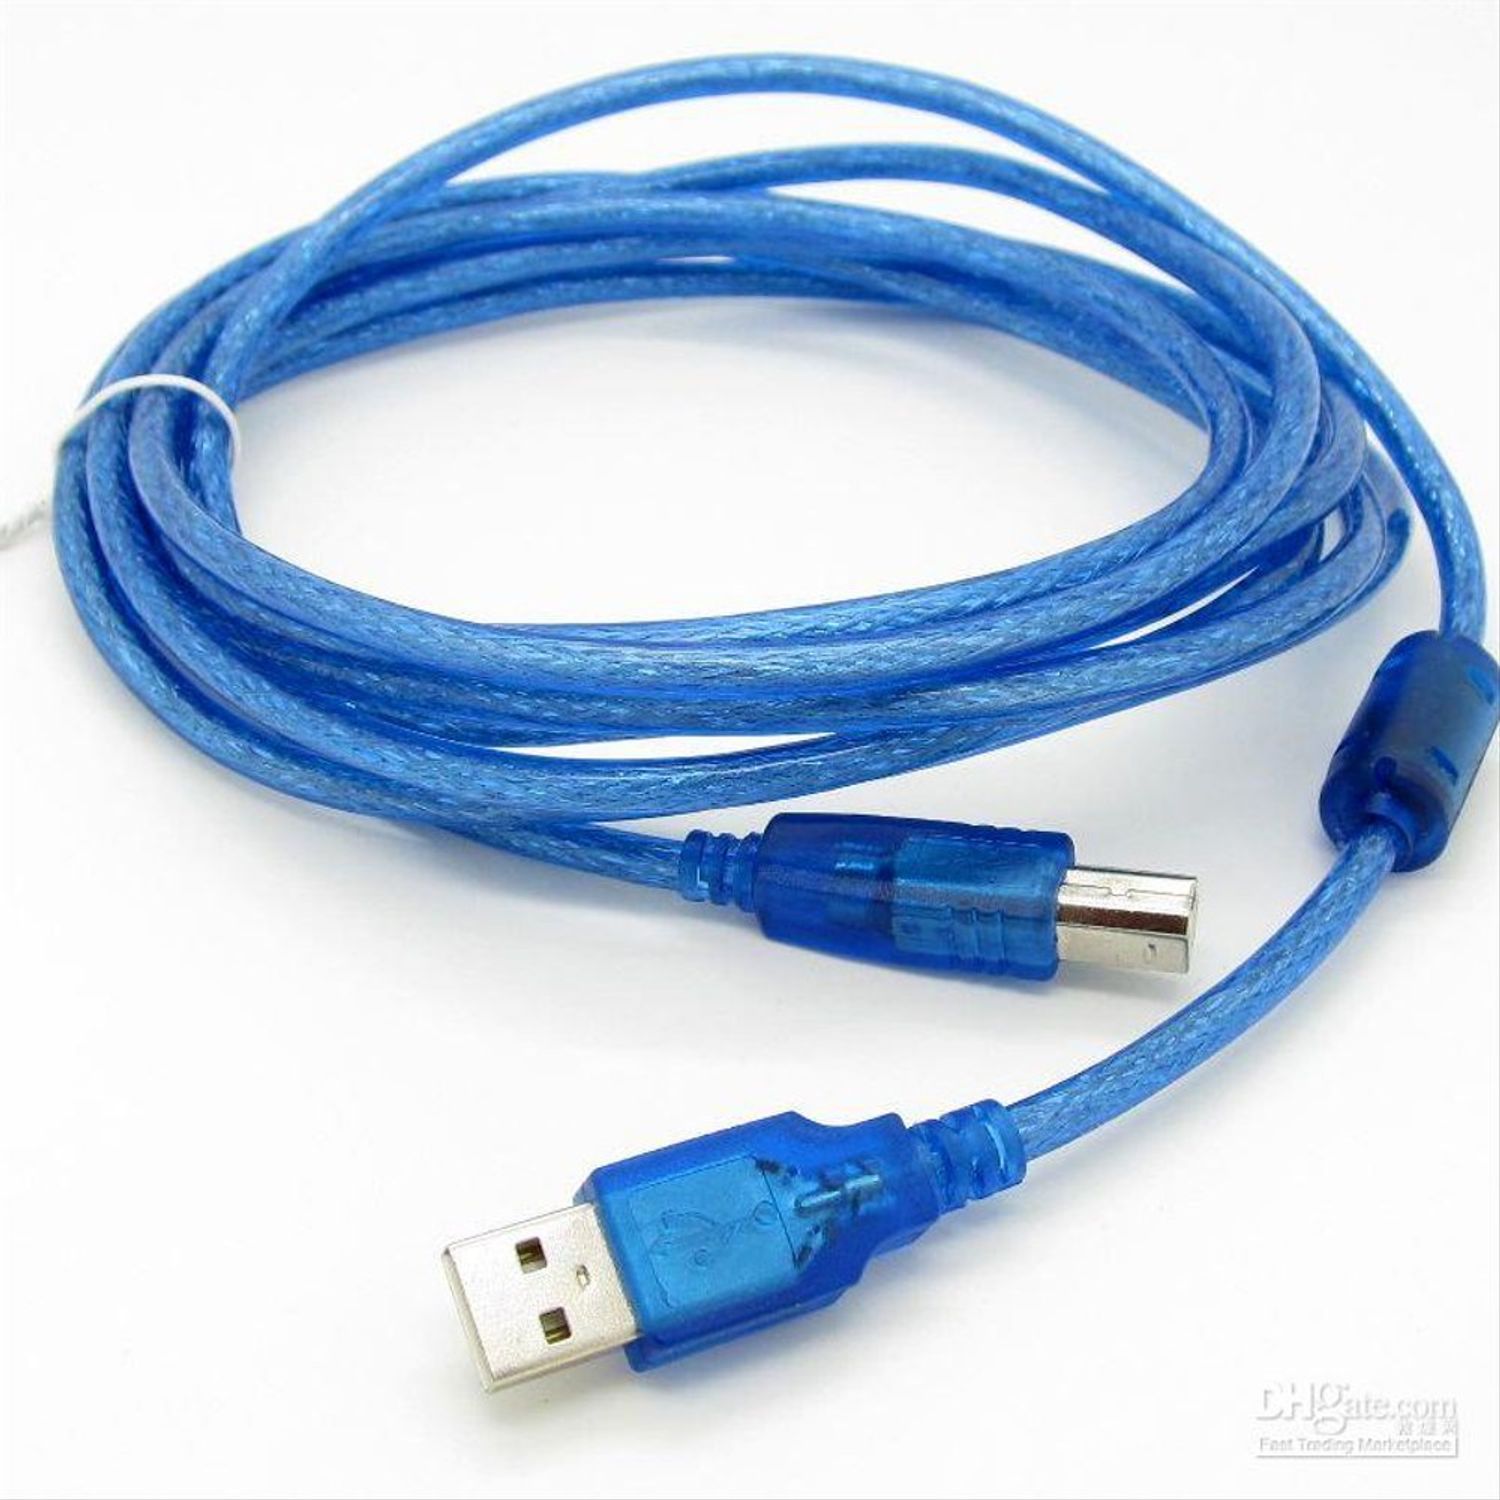 CABLE USB PARA IMPRESORA 5M, GENERICO